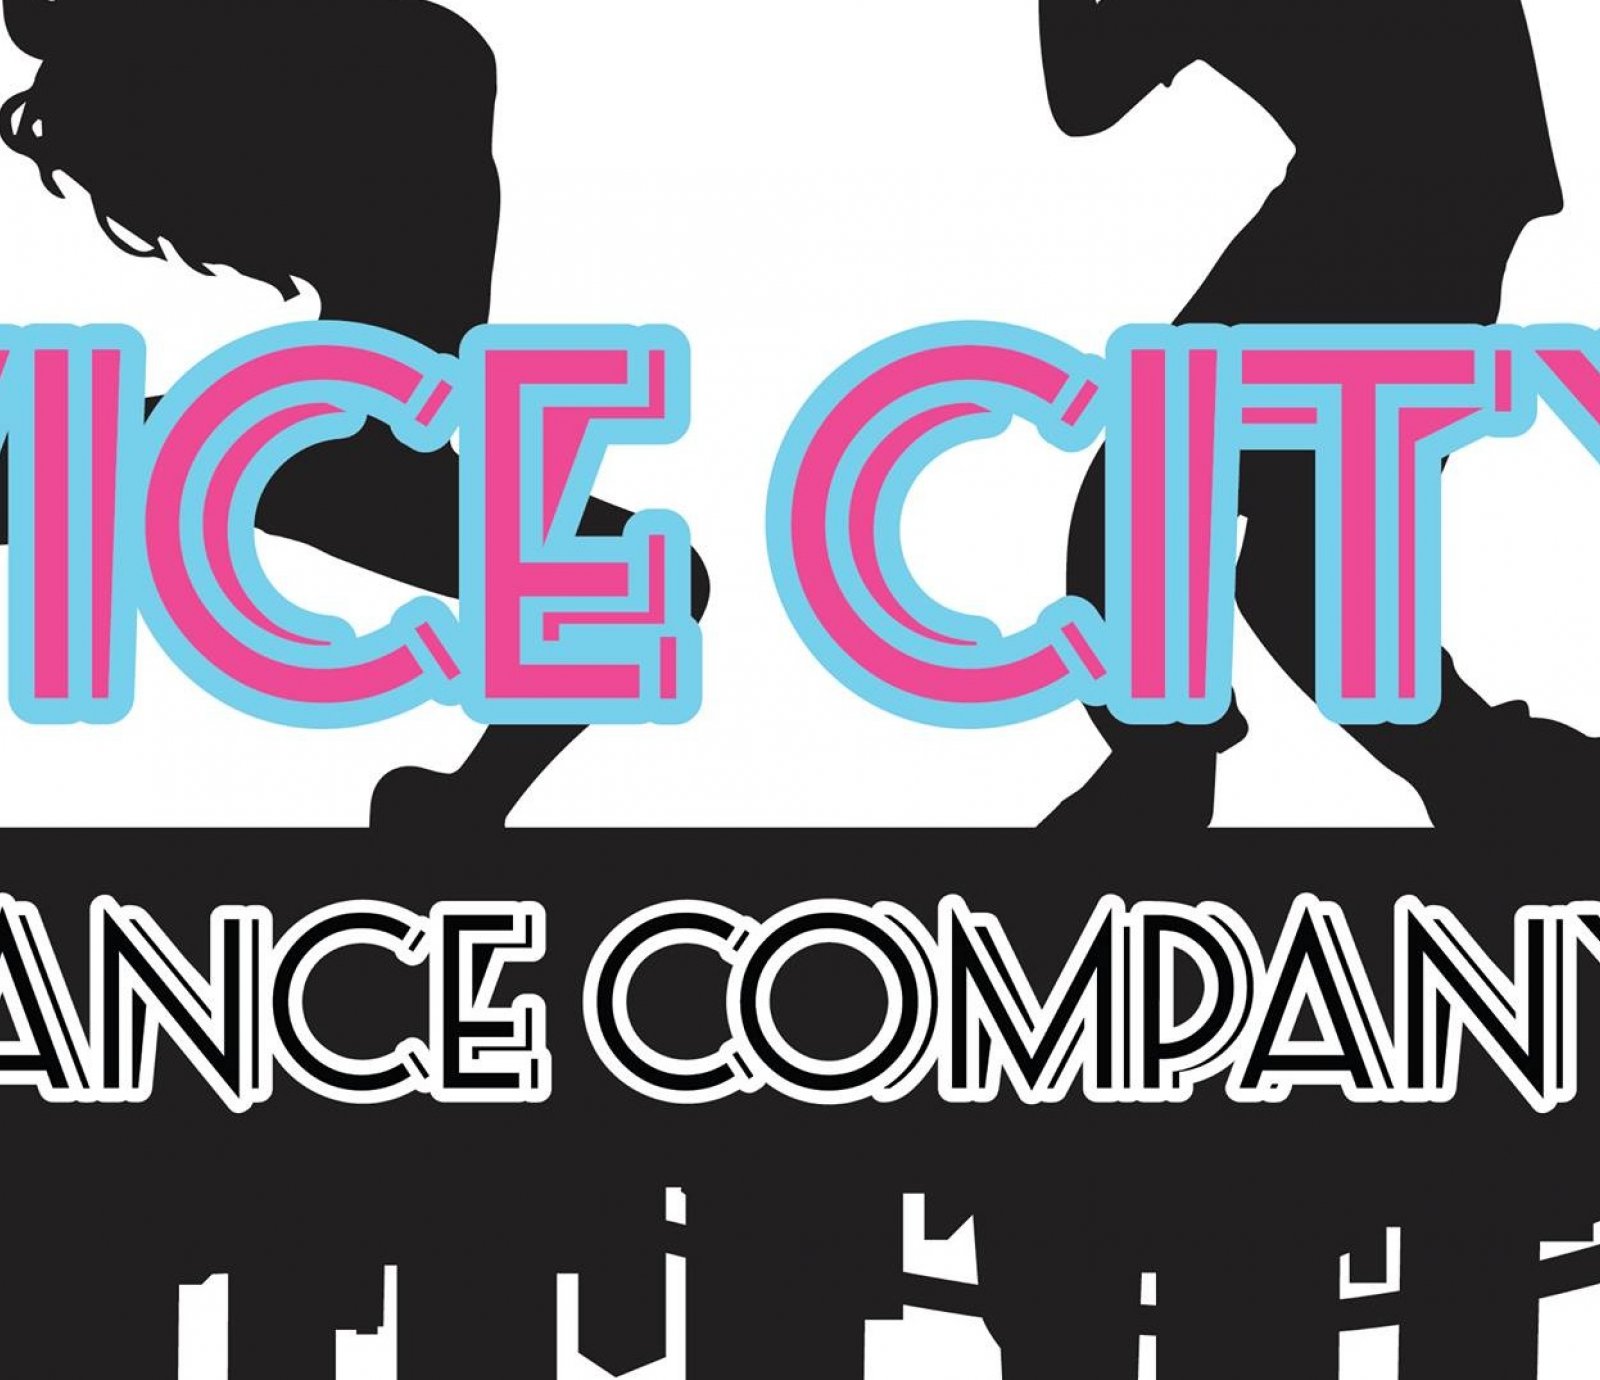 Vice City Dance Company